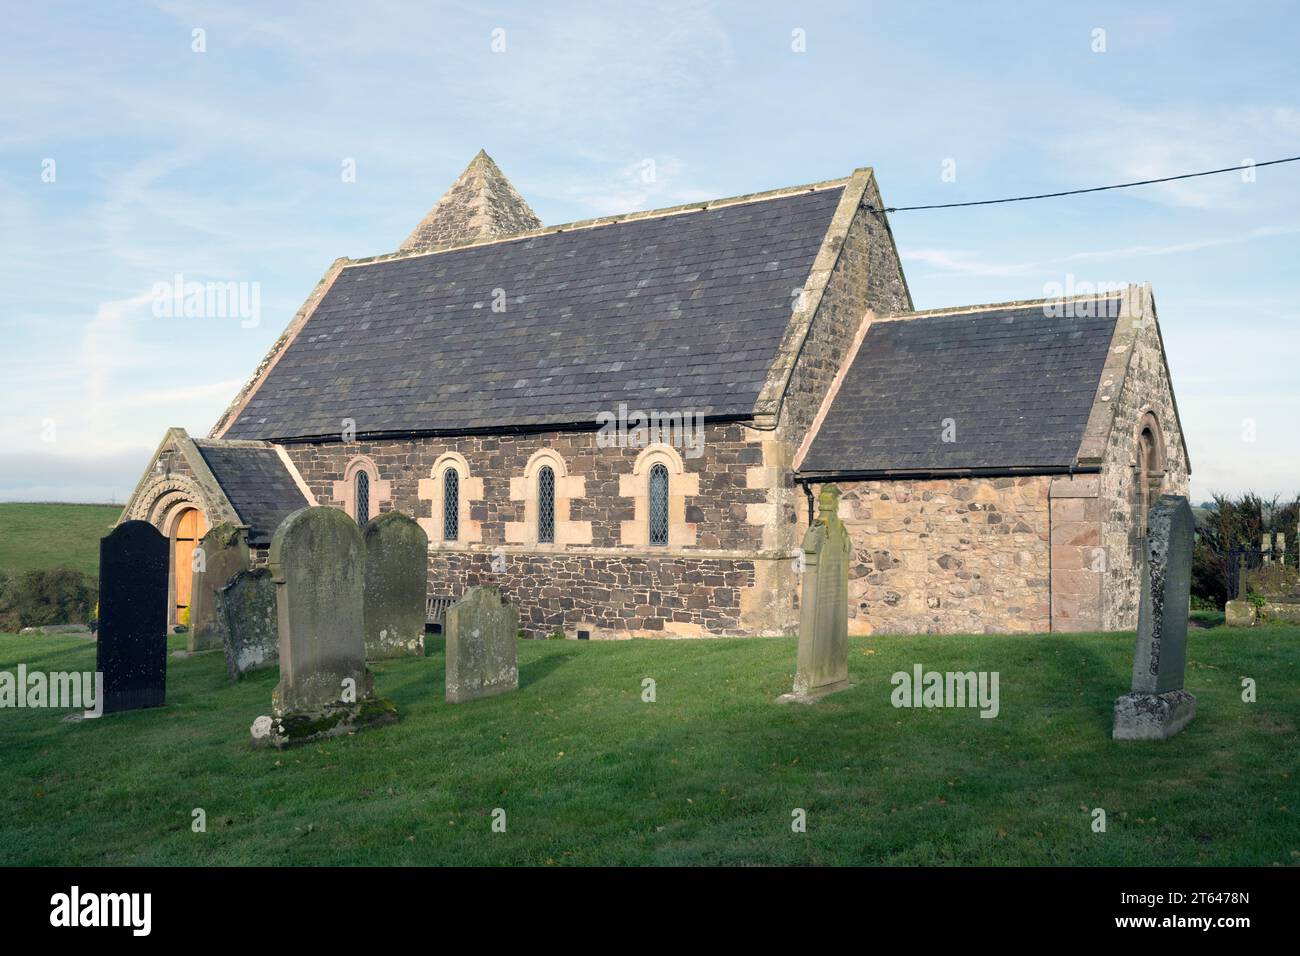 St Paul's Church - The Flodden Church - Branxton, Cornhill-on-Tweed, Northumberland, England, UK - parish church of Branxton - grade II listed. Stock Photo